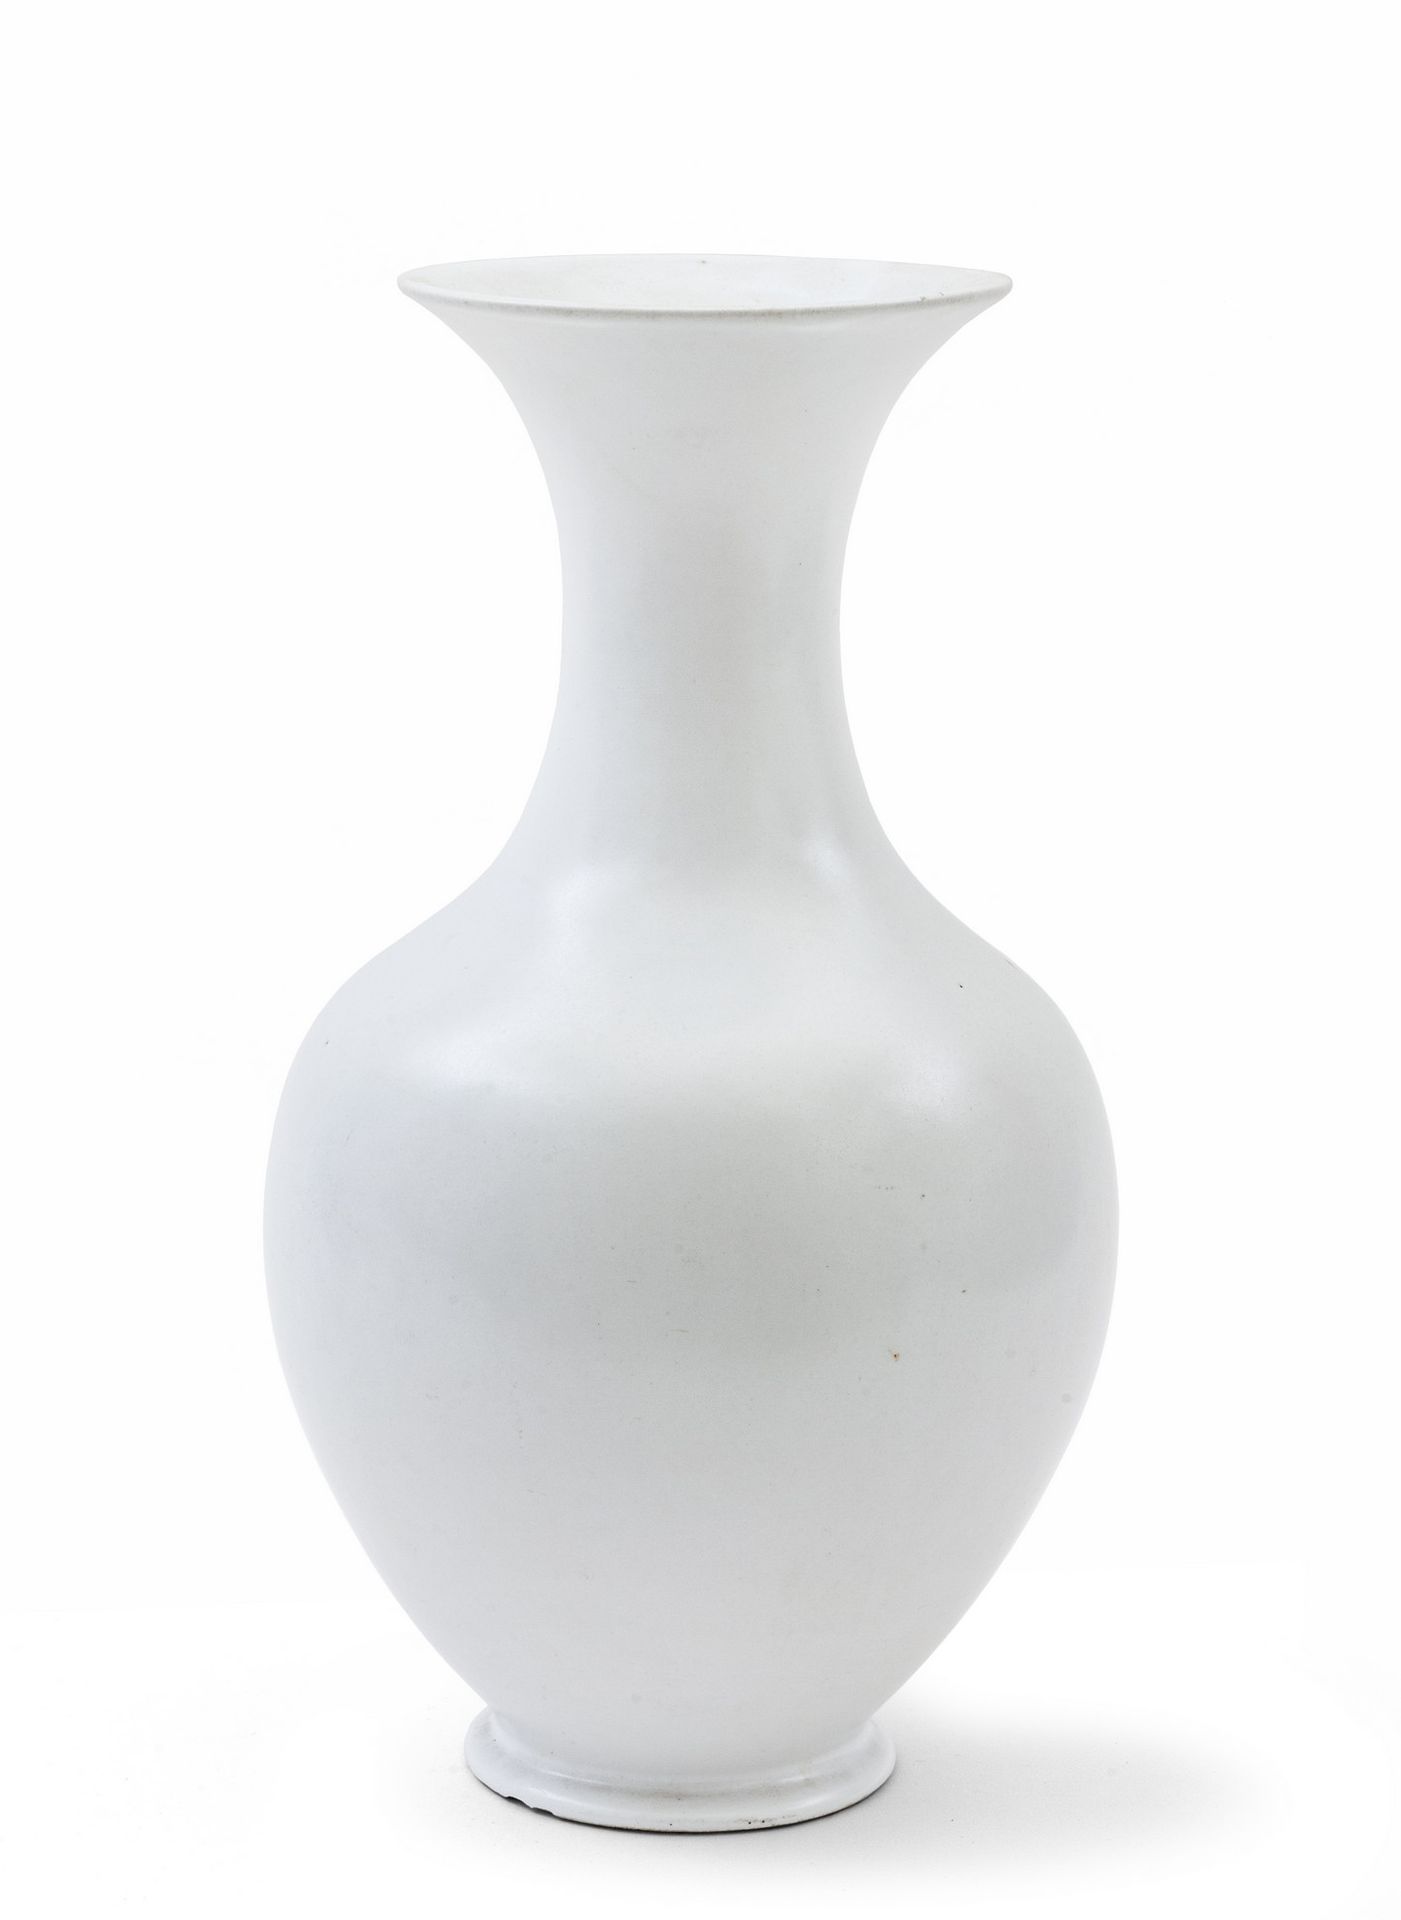 ANDLOVIZ GUIDO GUIDO ANDLOVIZ
Vase modèle "655" pour la S.C.I. (Società Ceramica&hellip;